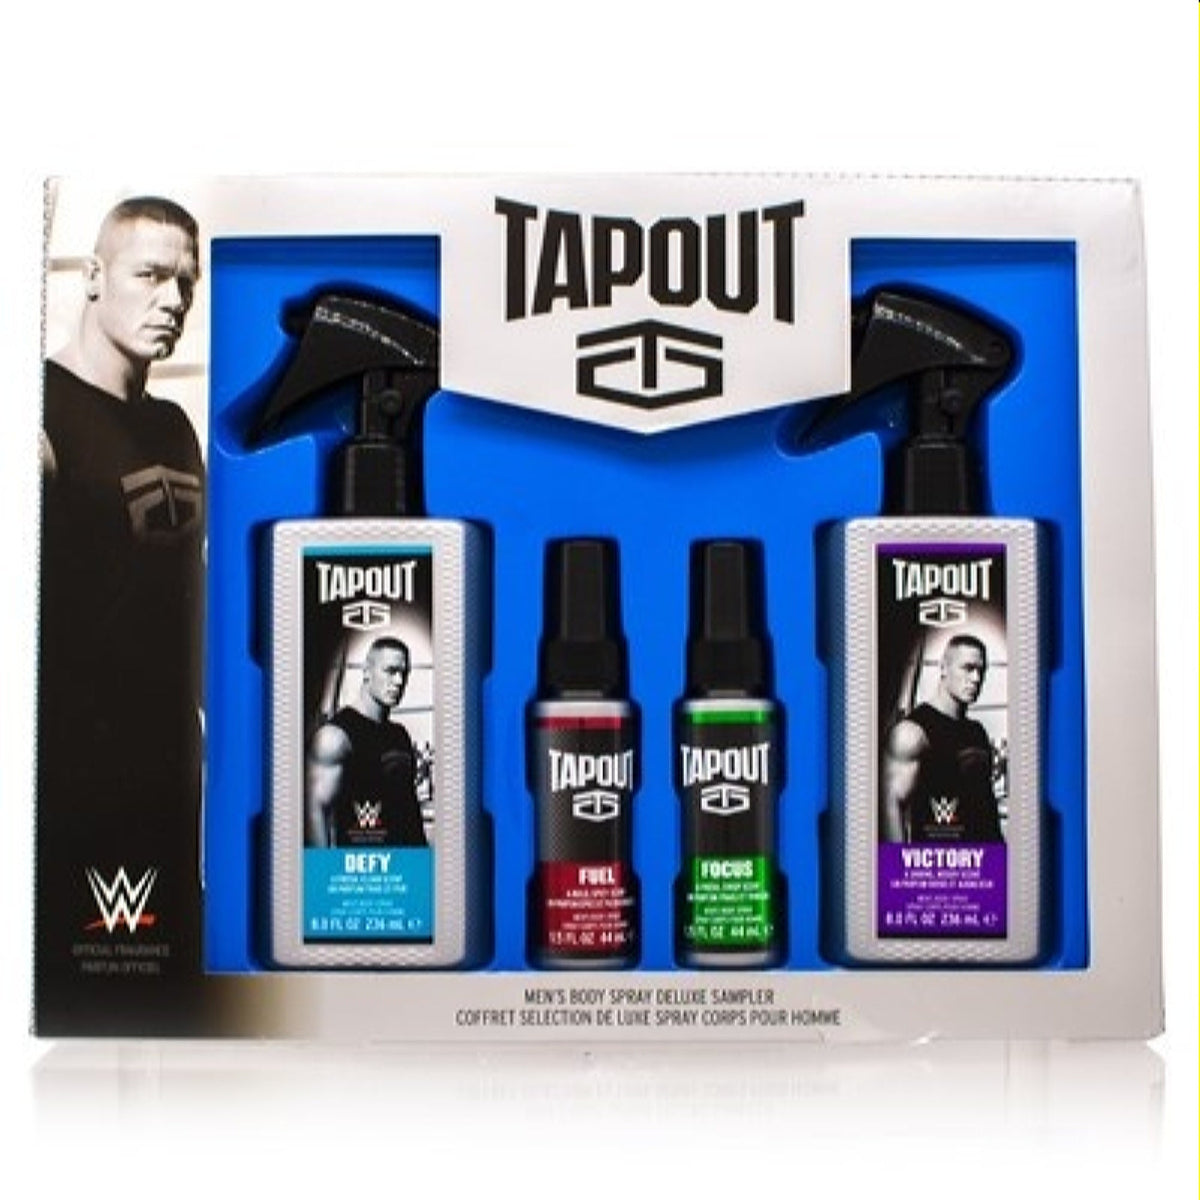  Tapout Set Slightly For Men A0110794